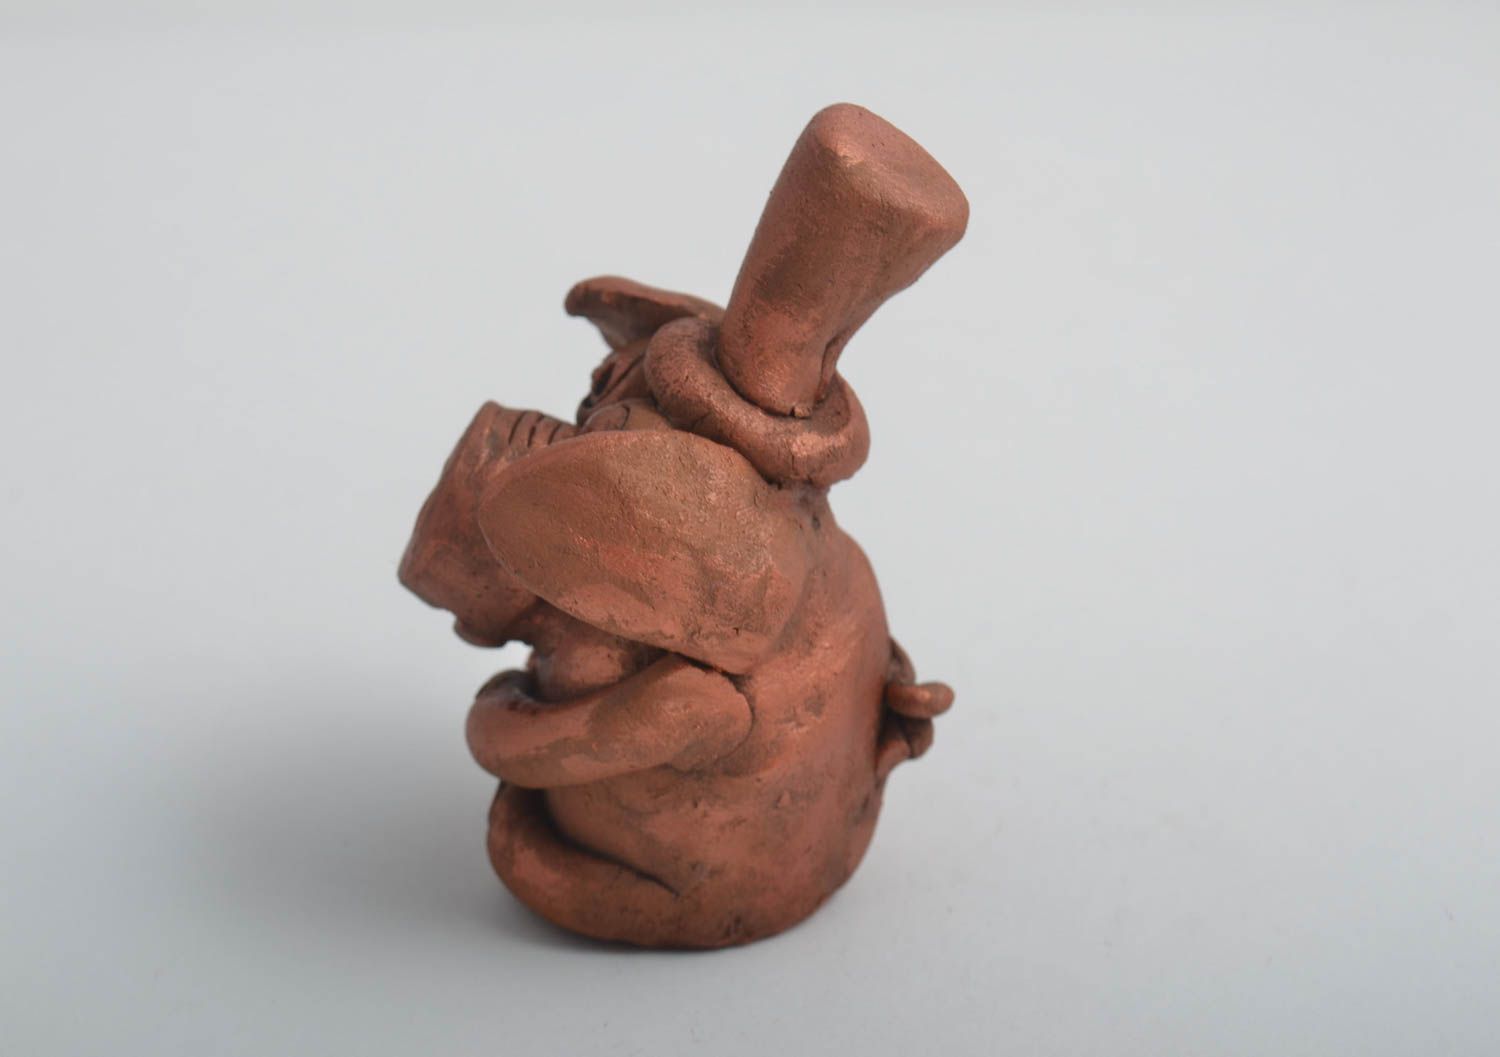 Funny handmade ceramic figurine clay statuette designs sculpture art gift ideas photo 2